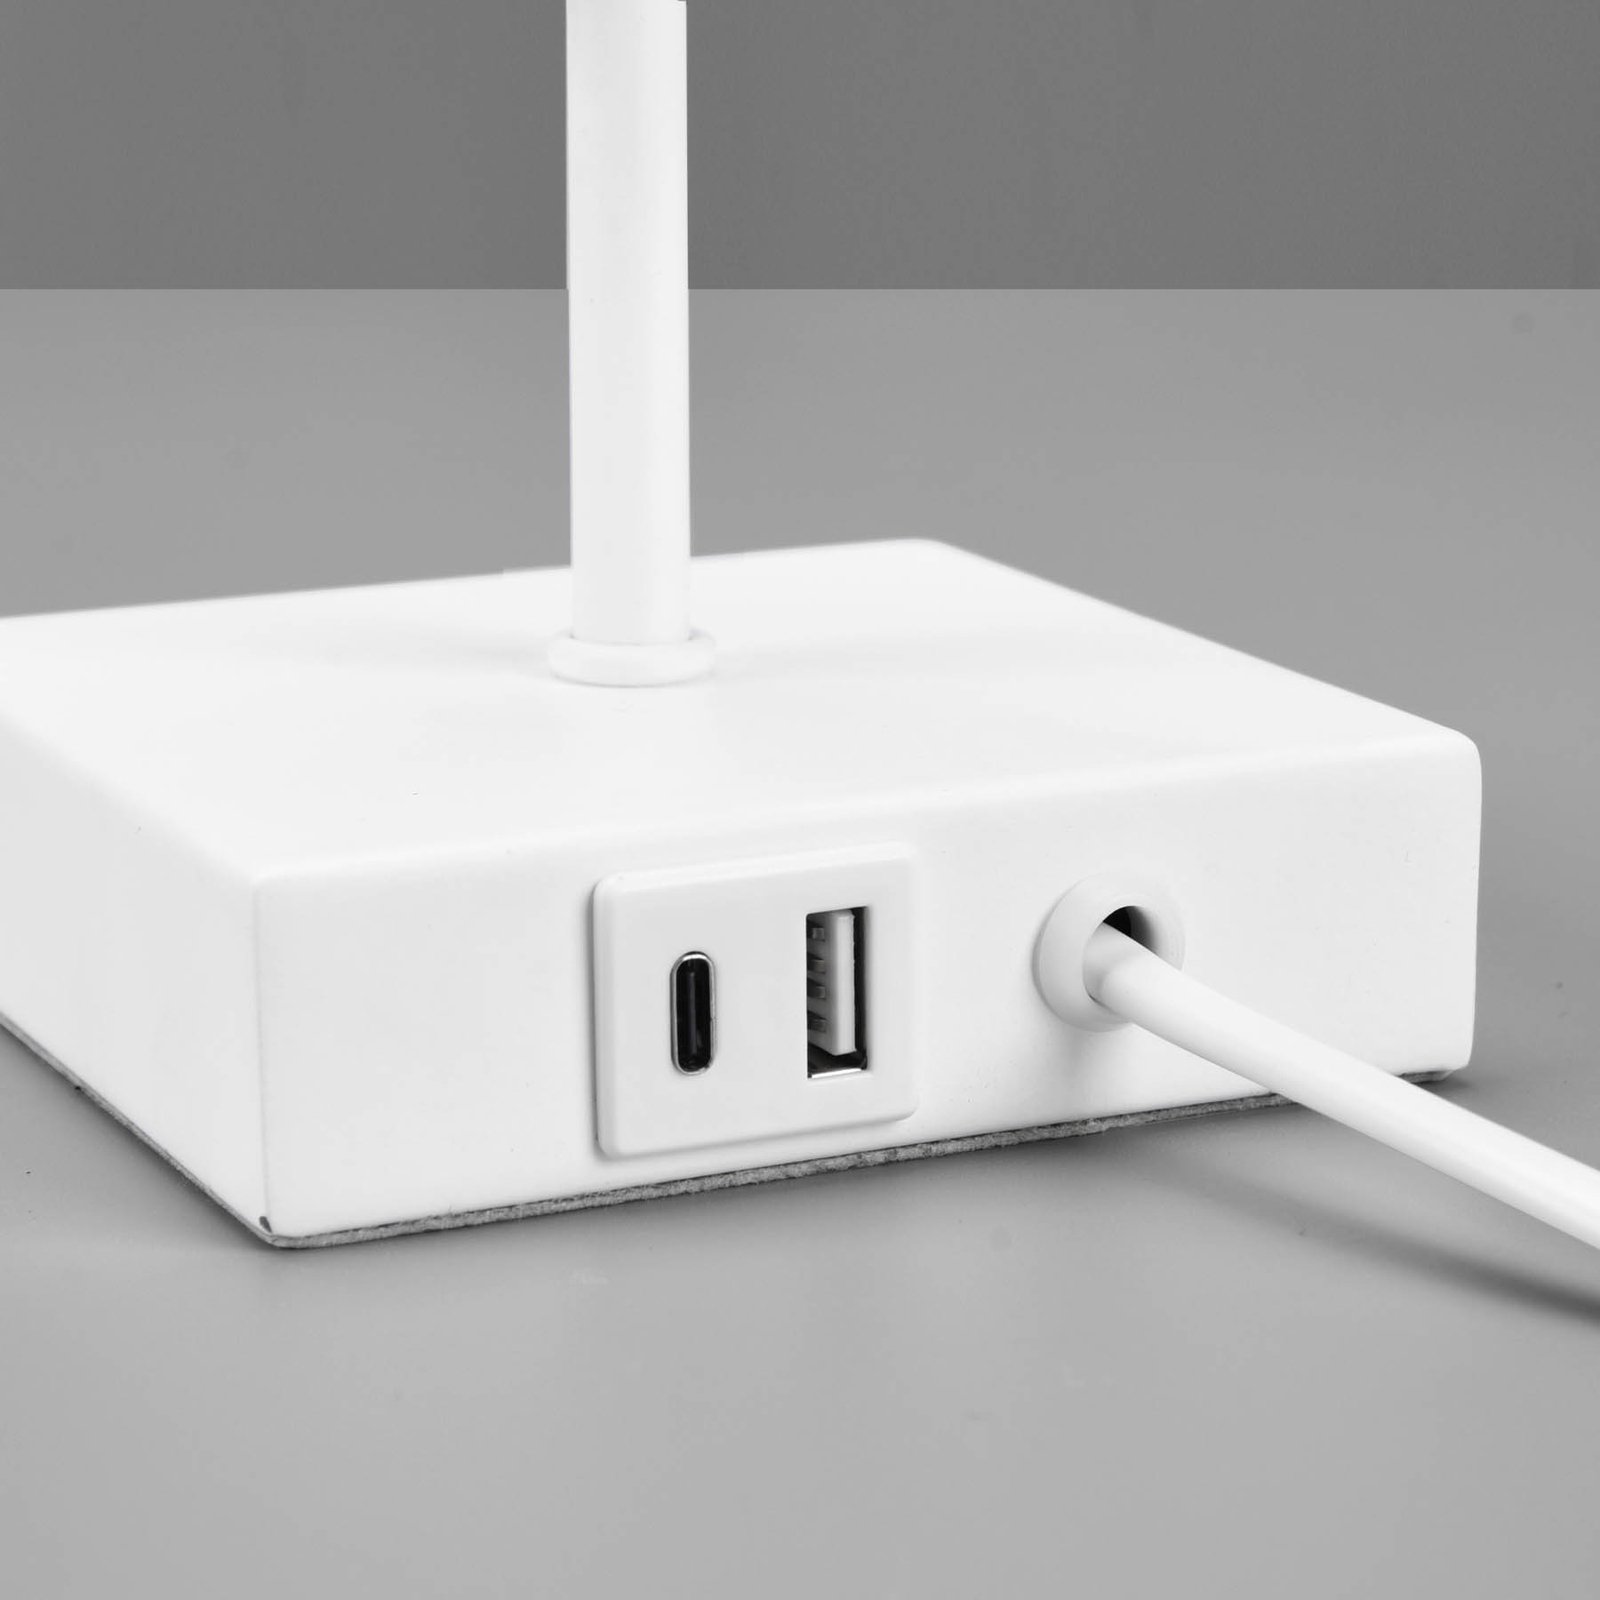 Tafellamp Ole met USB-aansluiting, wit/wit